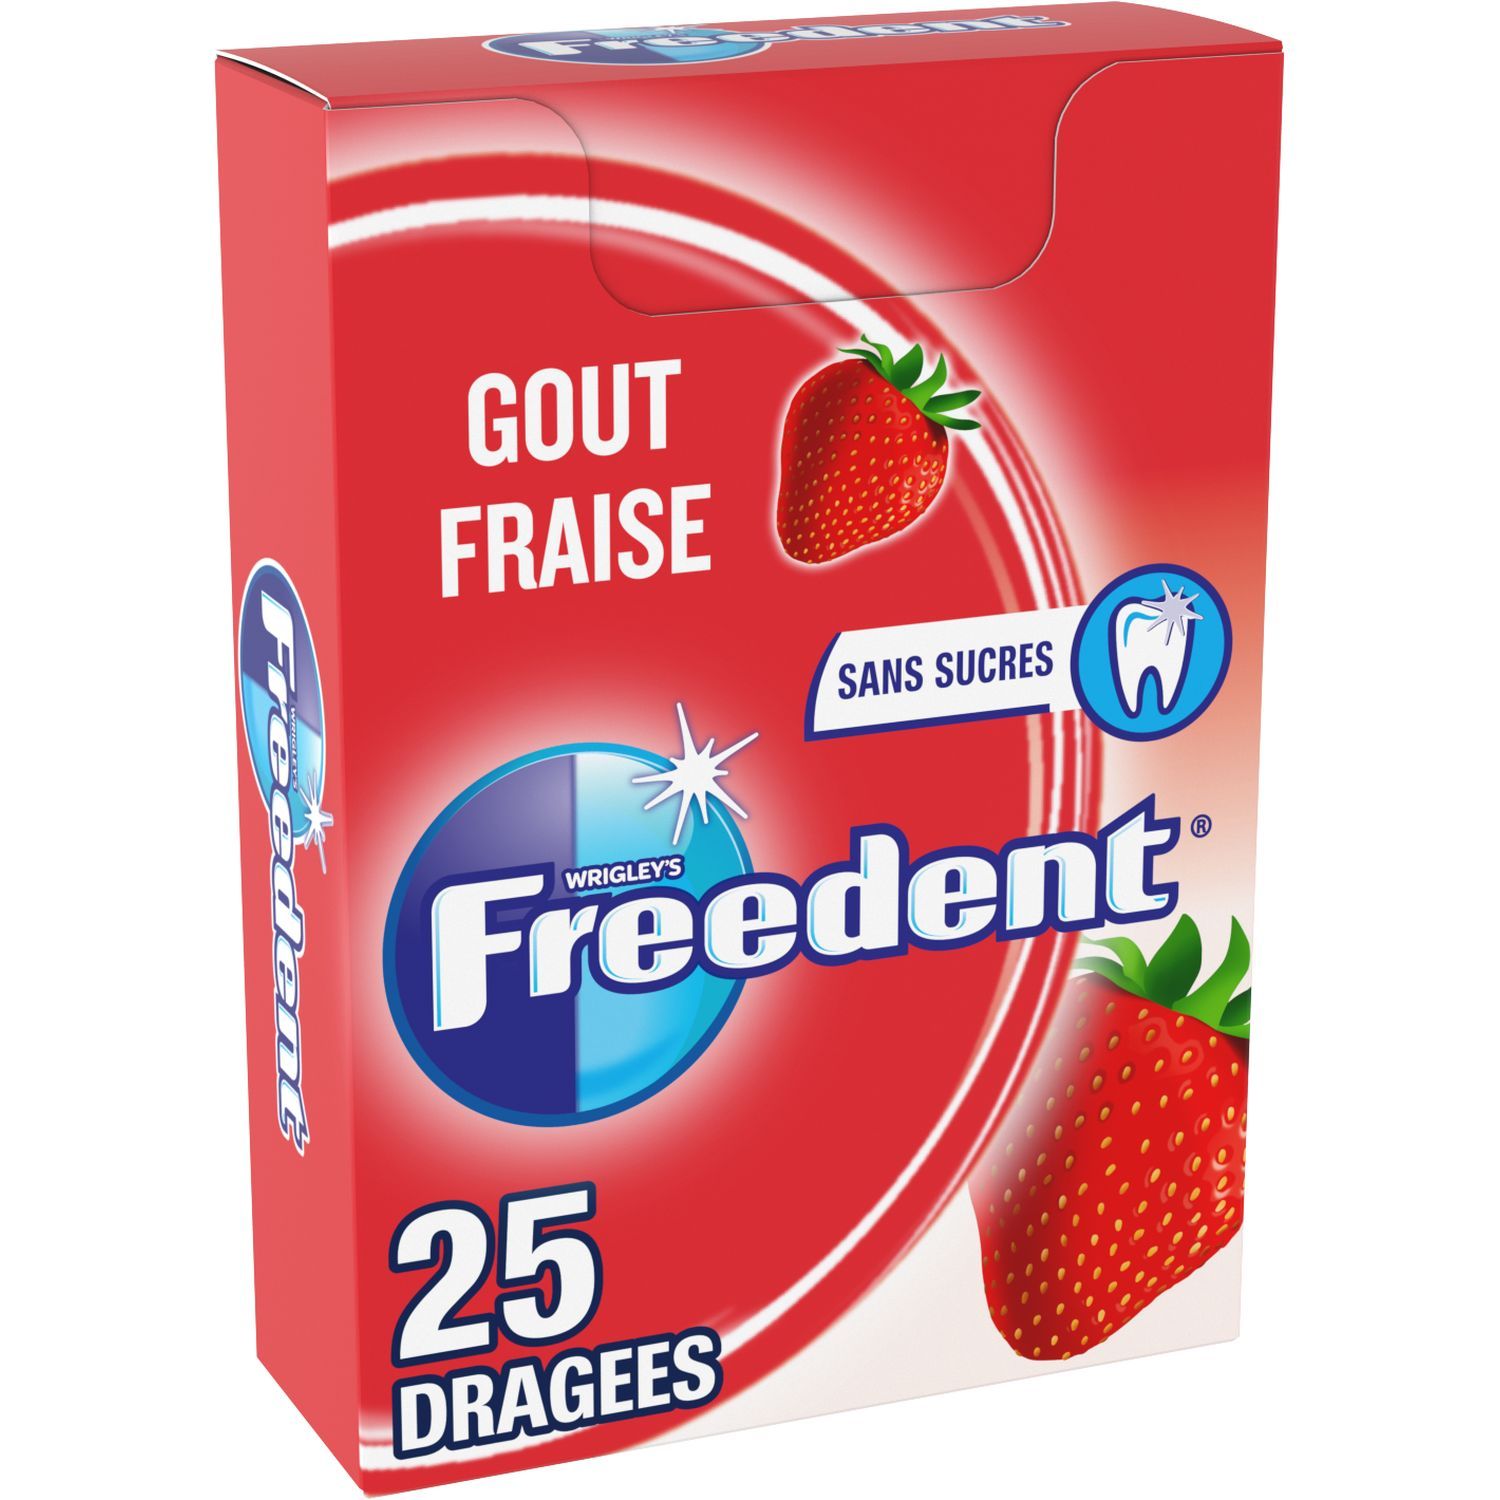 FREEDENT Chewing-Gum Fraise 5x5 (65g) - Cdiscount Au quotidien